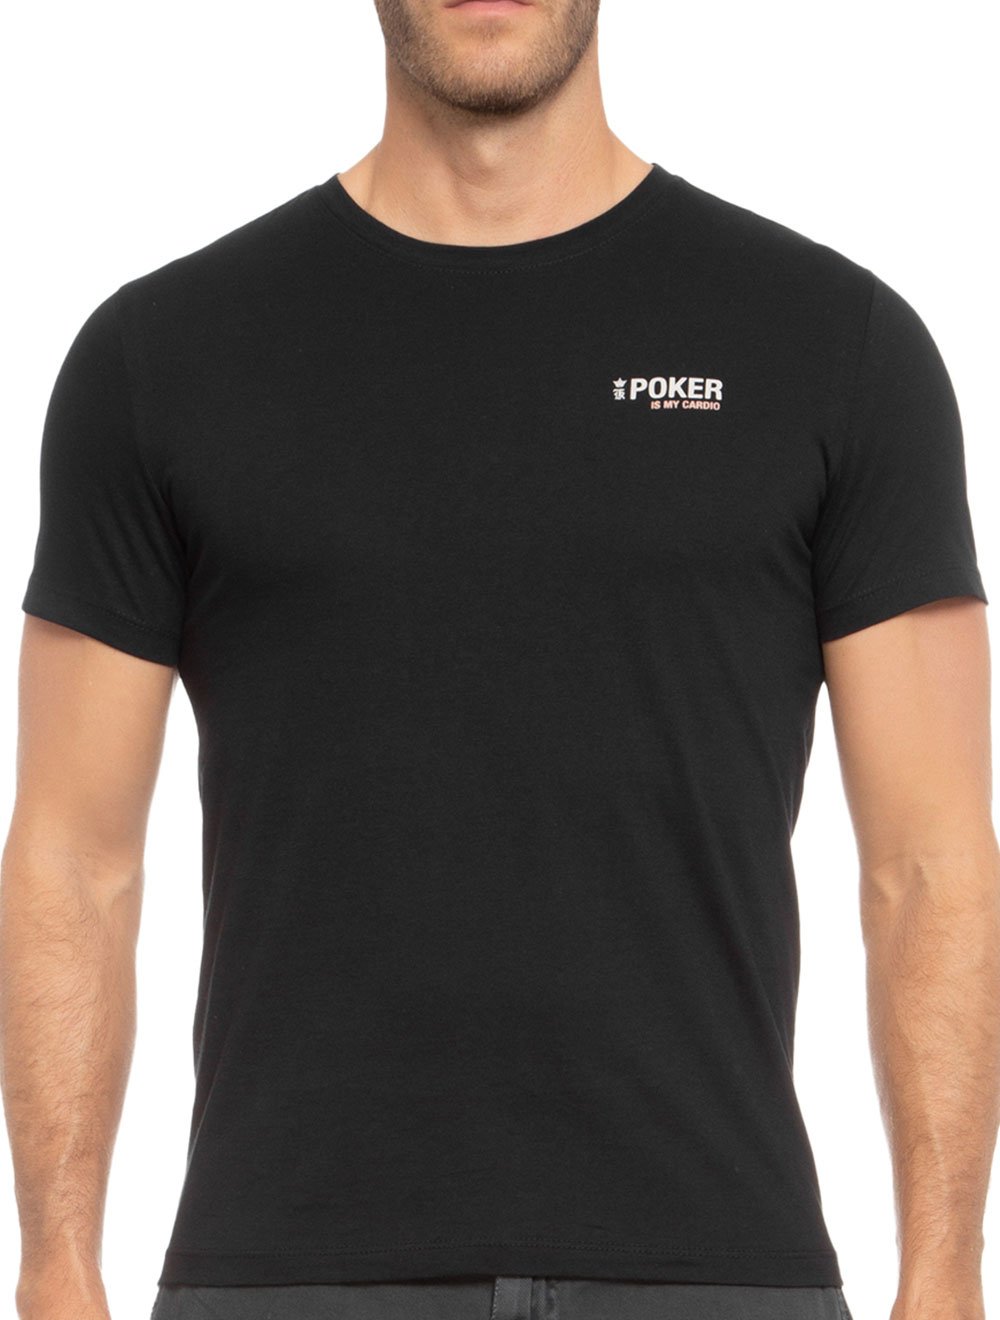 Camiseta Sergio K Masculina 10x Poker Preta